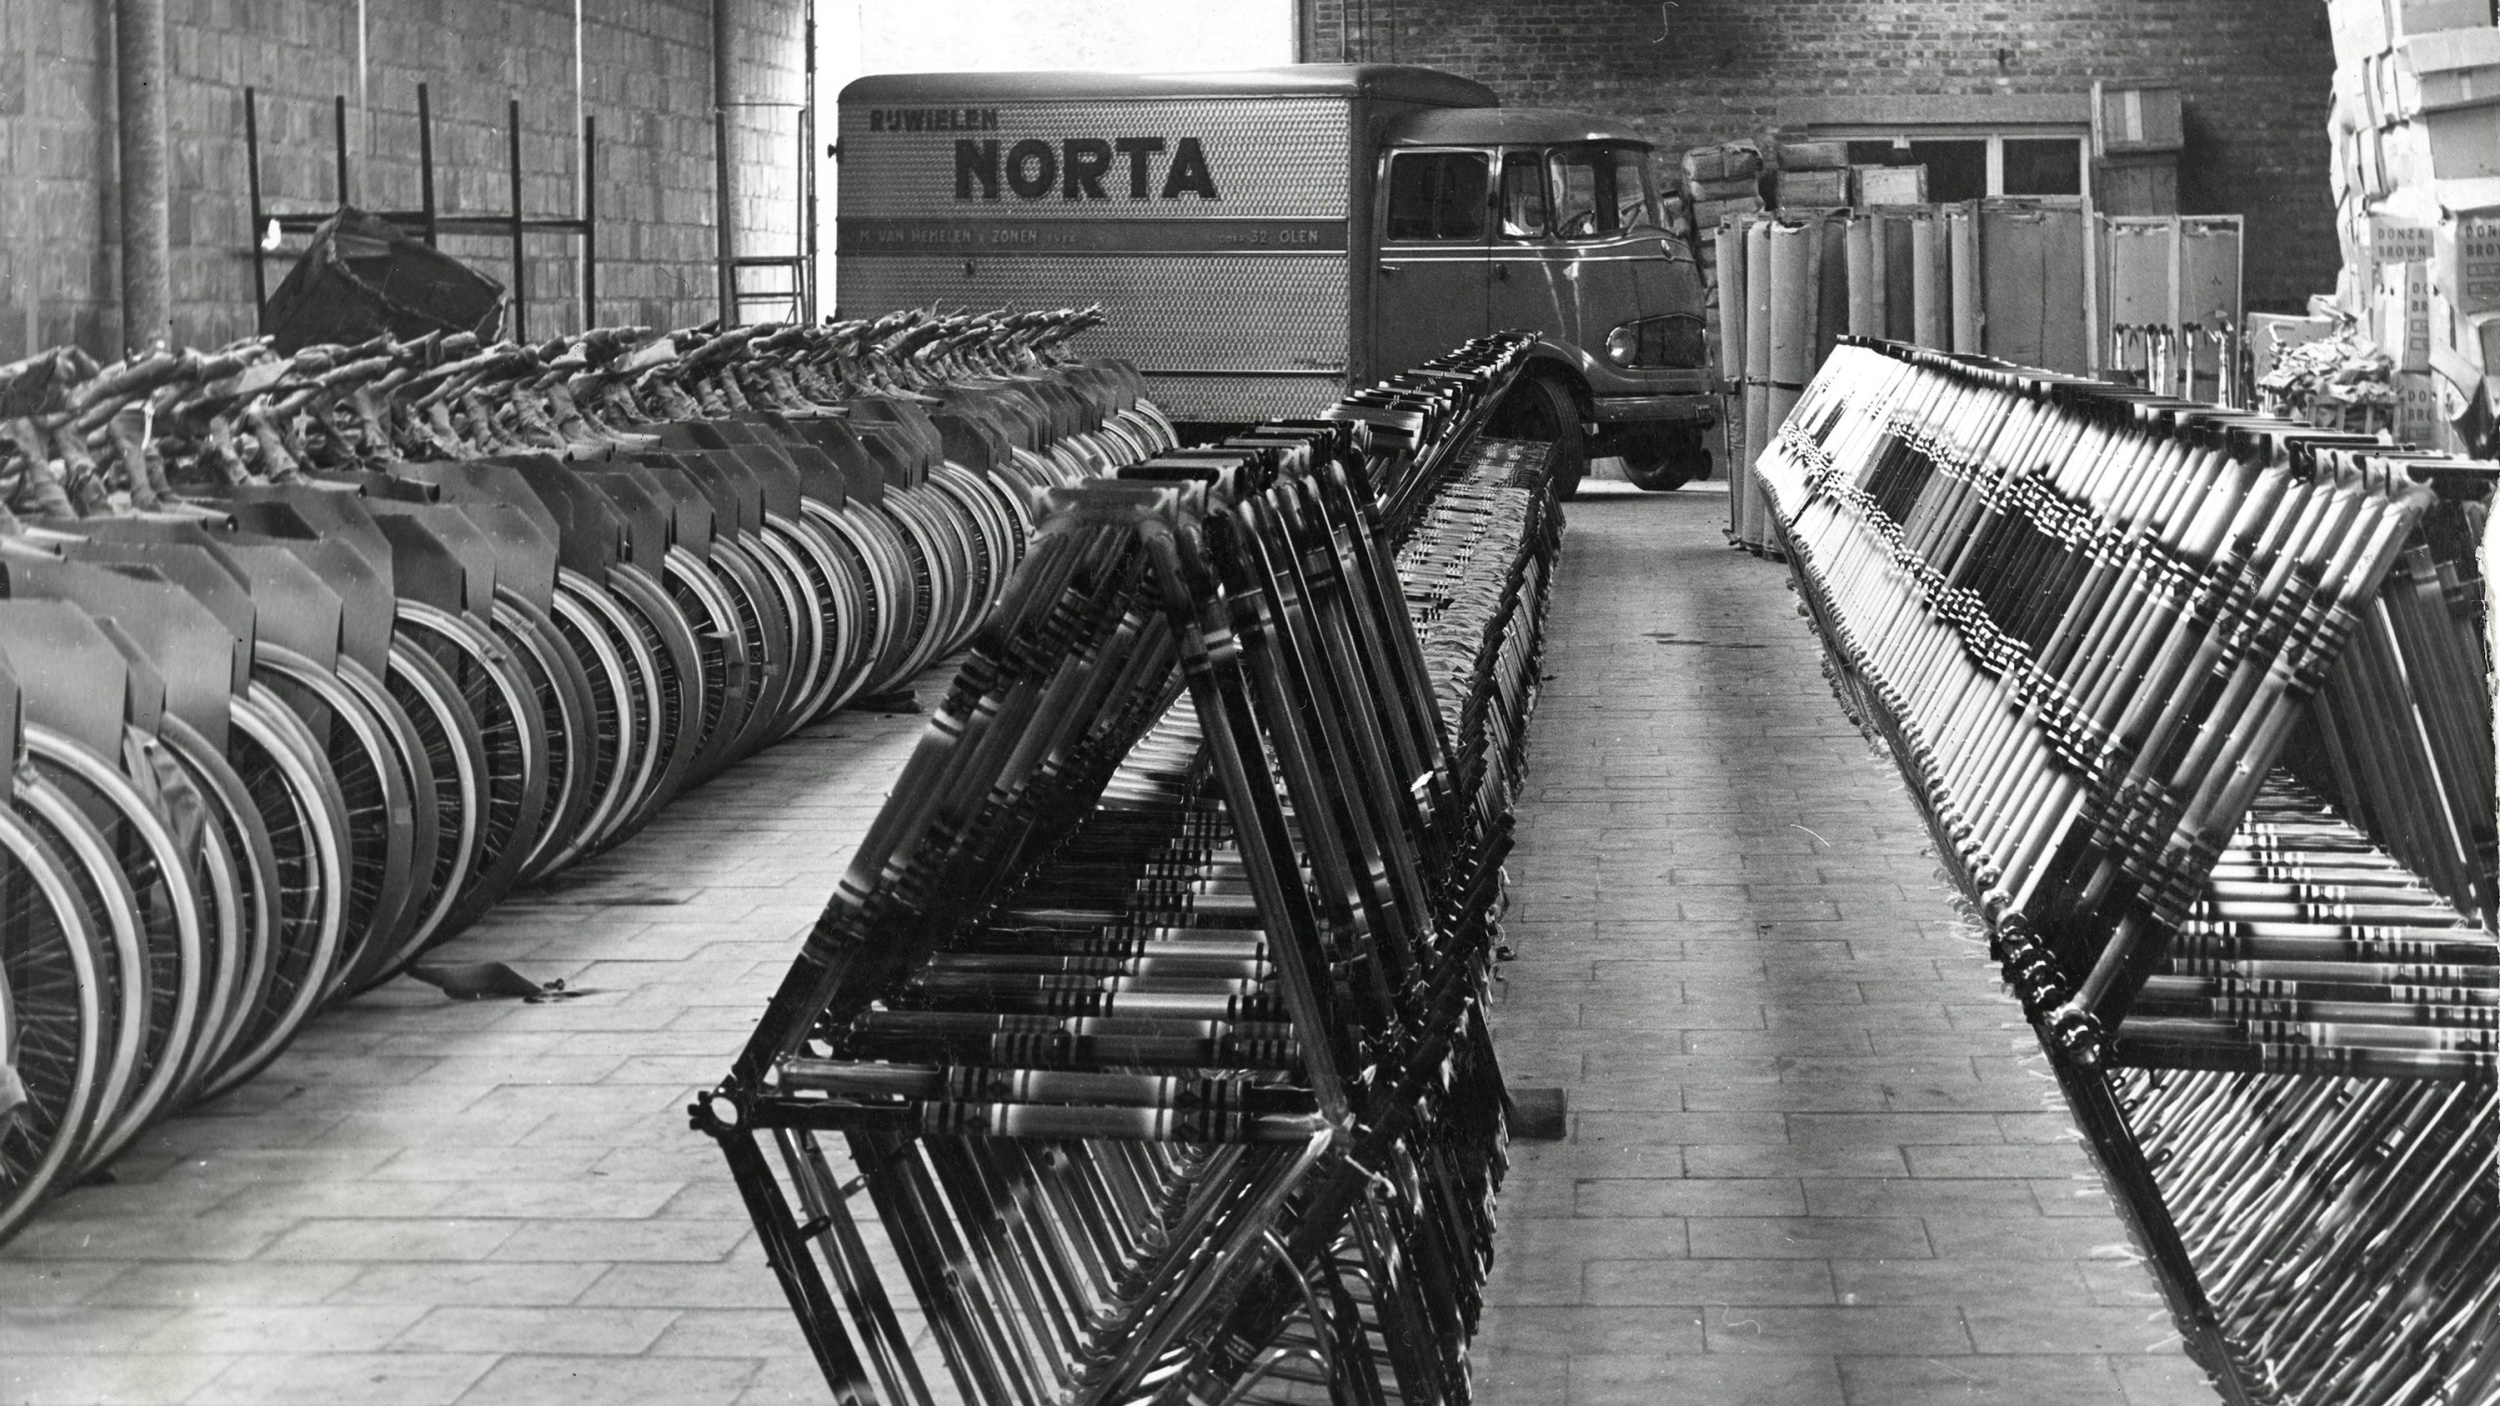 1948 Norta groothandelszaak